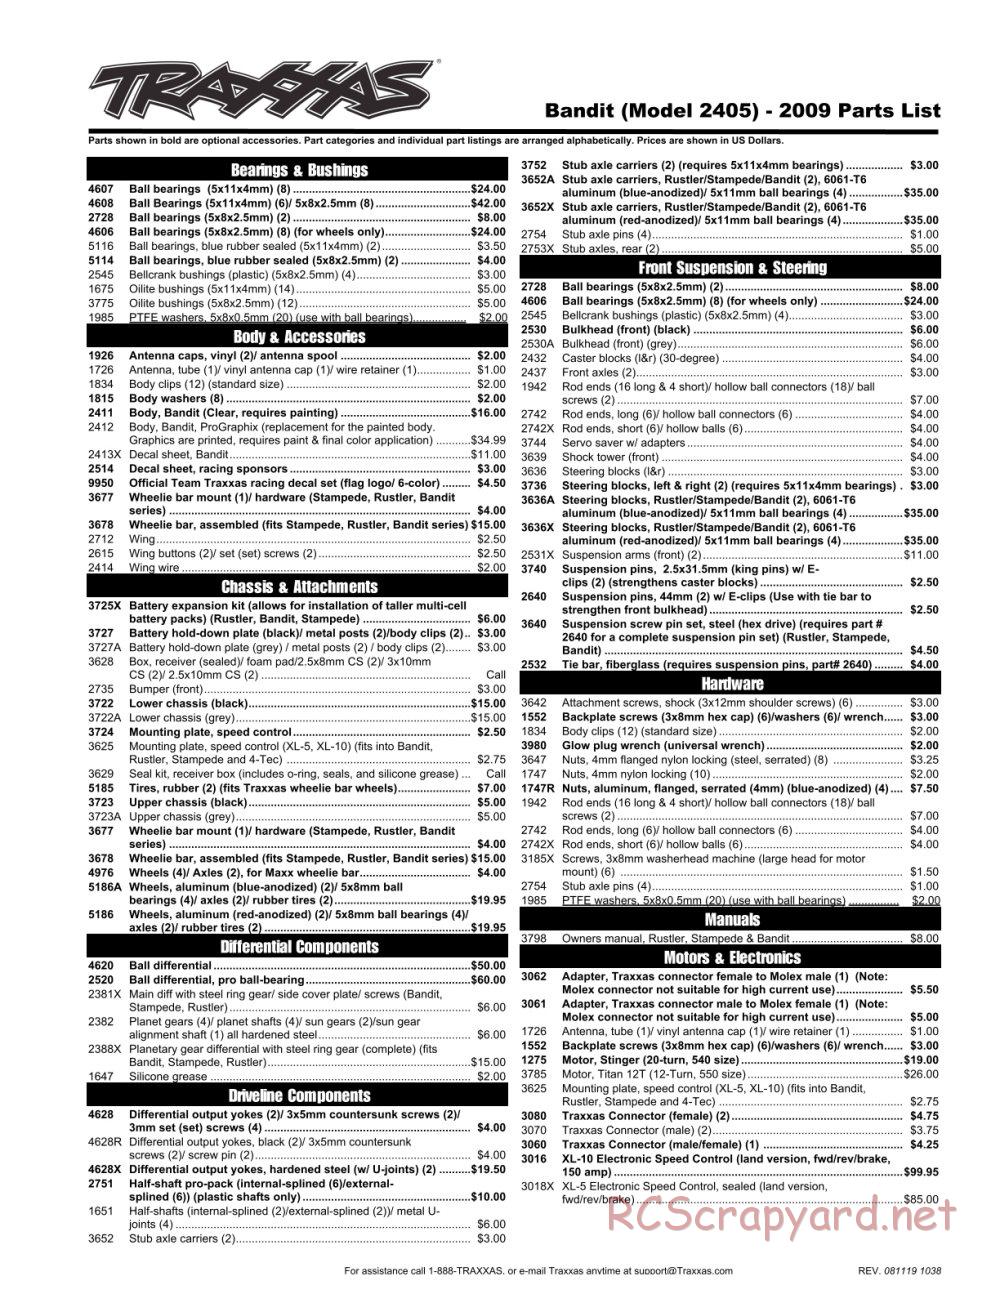 Traxxas - Bandit XL-5 - Parts List - Page 1